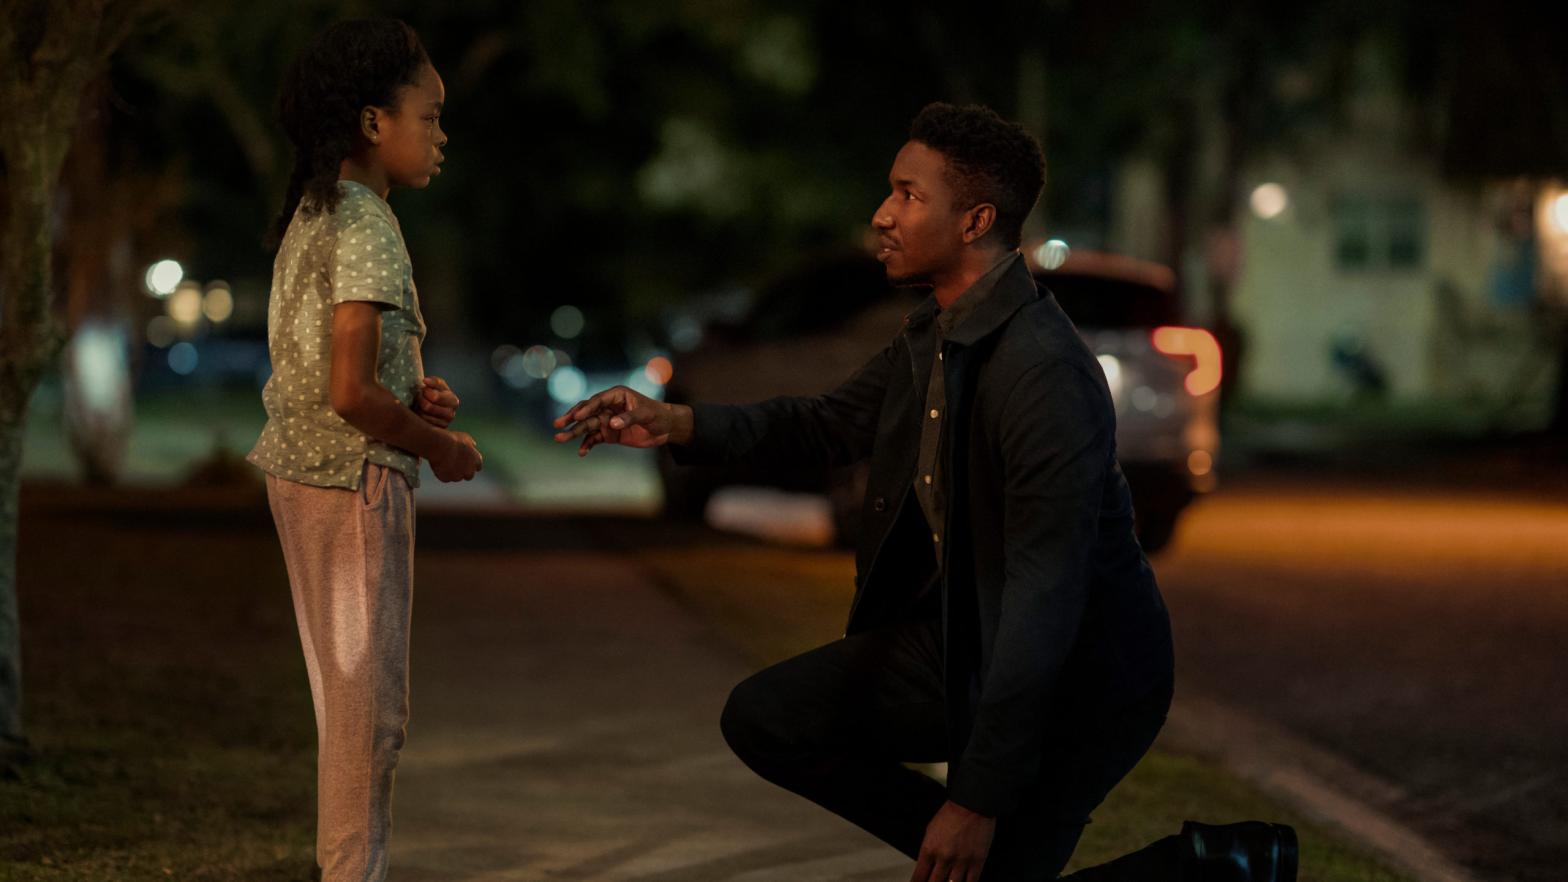 Ave (Amanda Christine) confronts her dad (Mamoudou Athie). (Photo: Alfonso Bresciani/Amazon Studios)